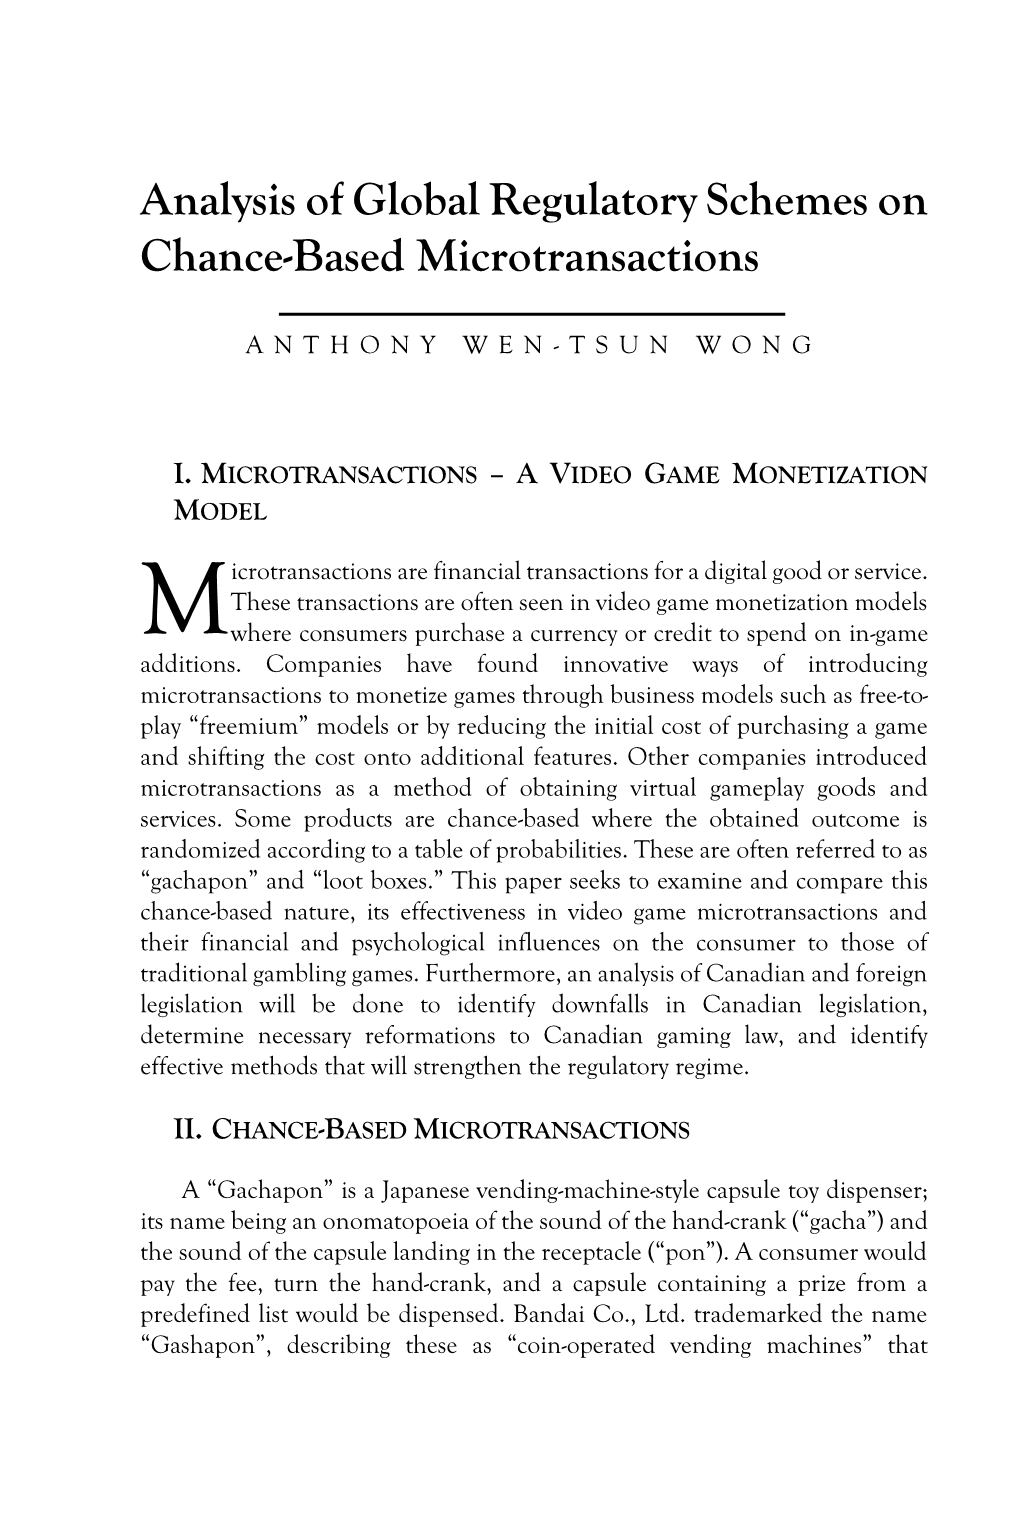 Analysis of Global Regulatory Schemes on Chance-Based Microtransactions